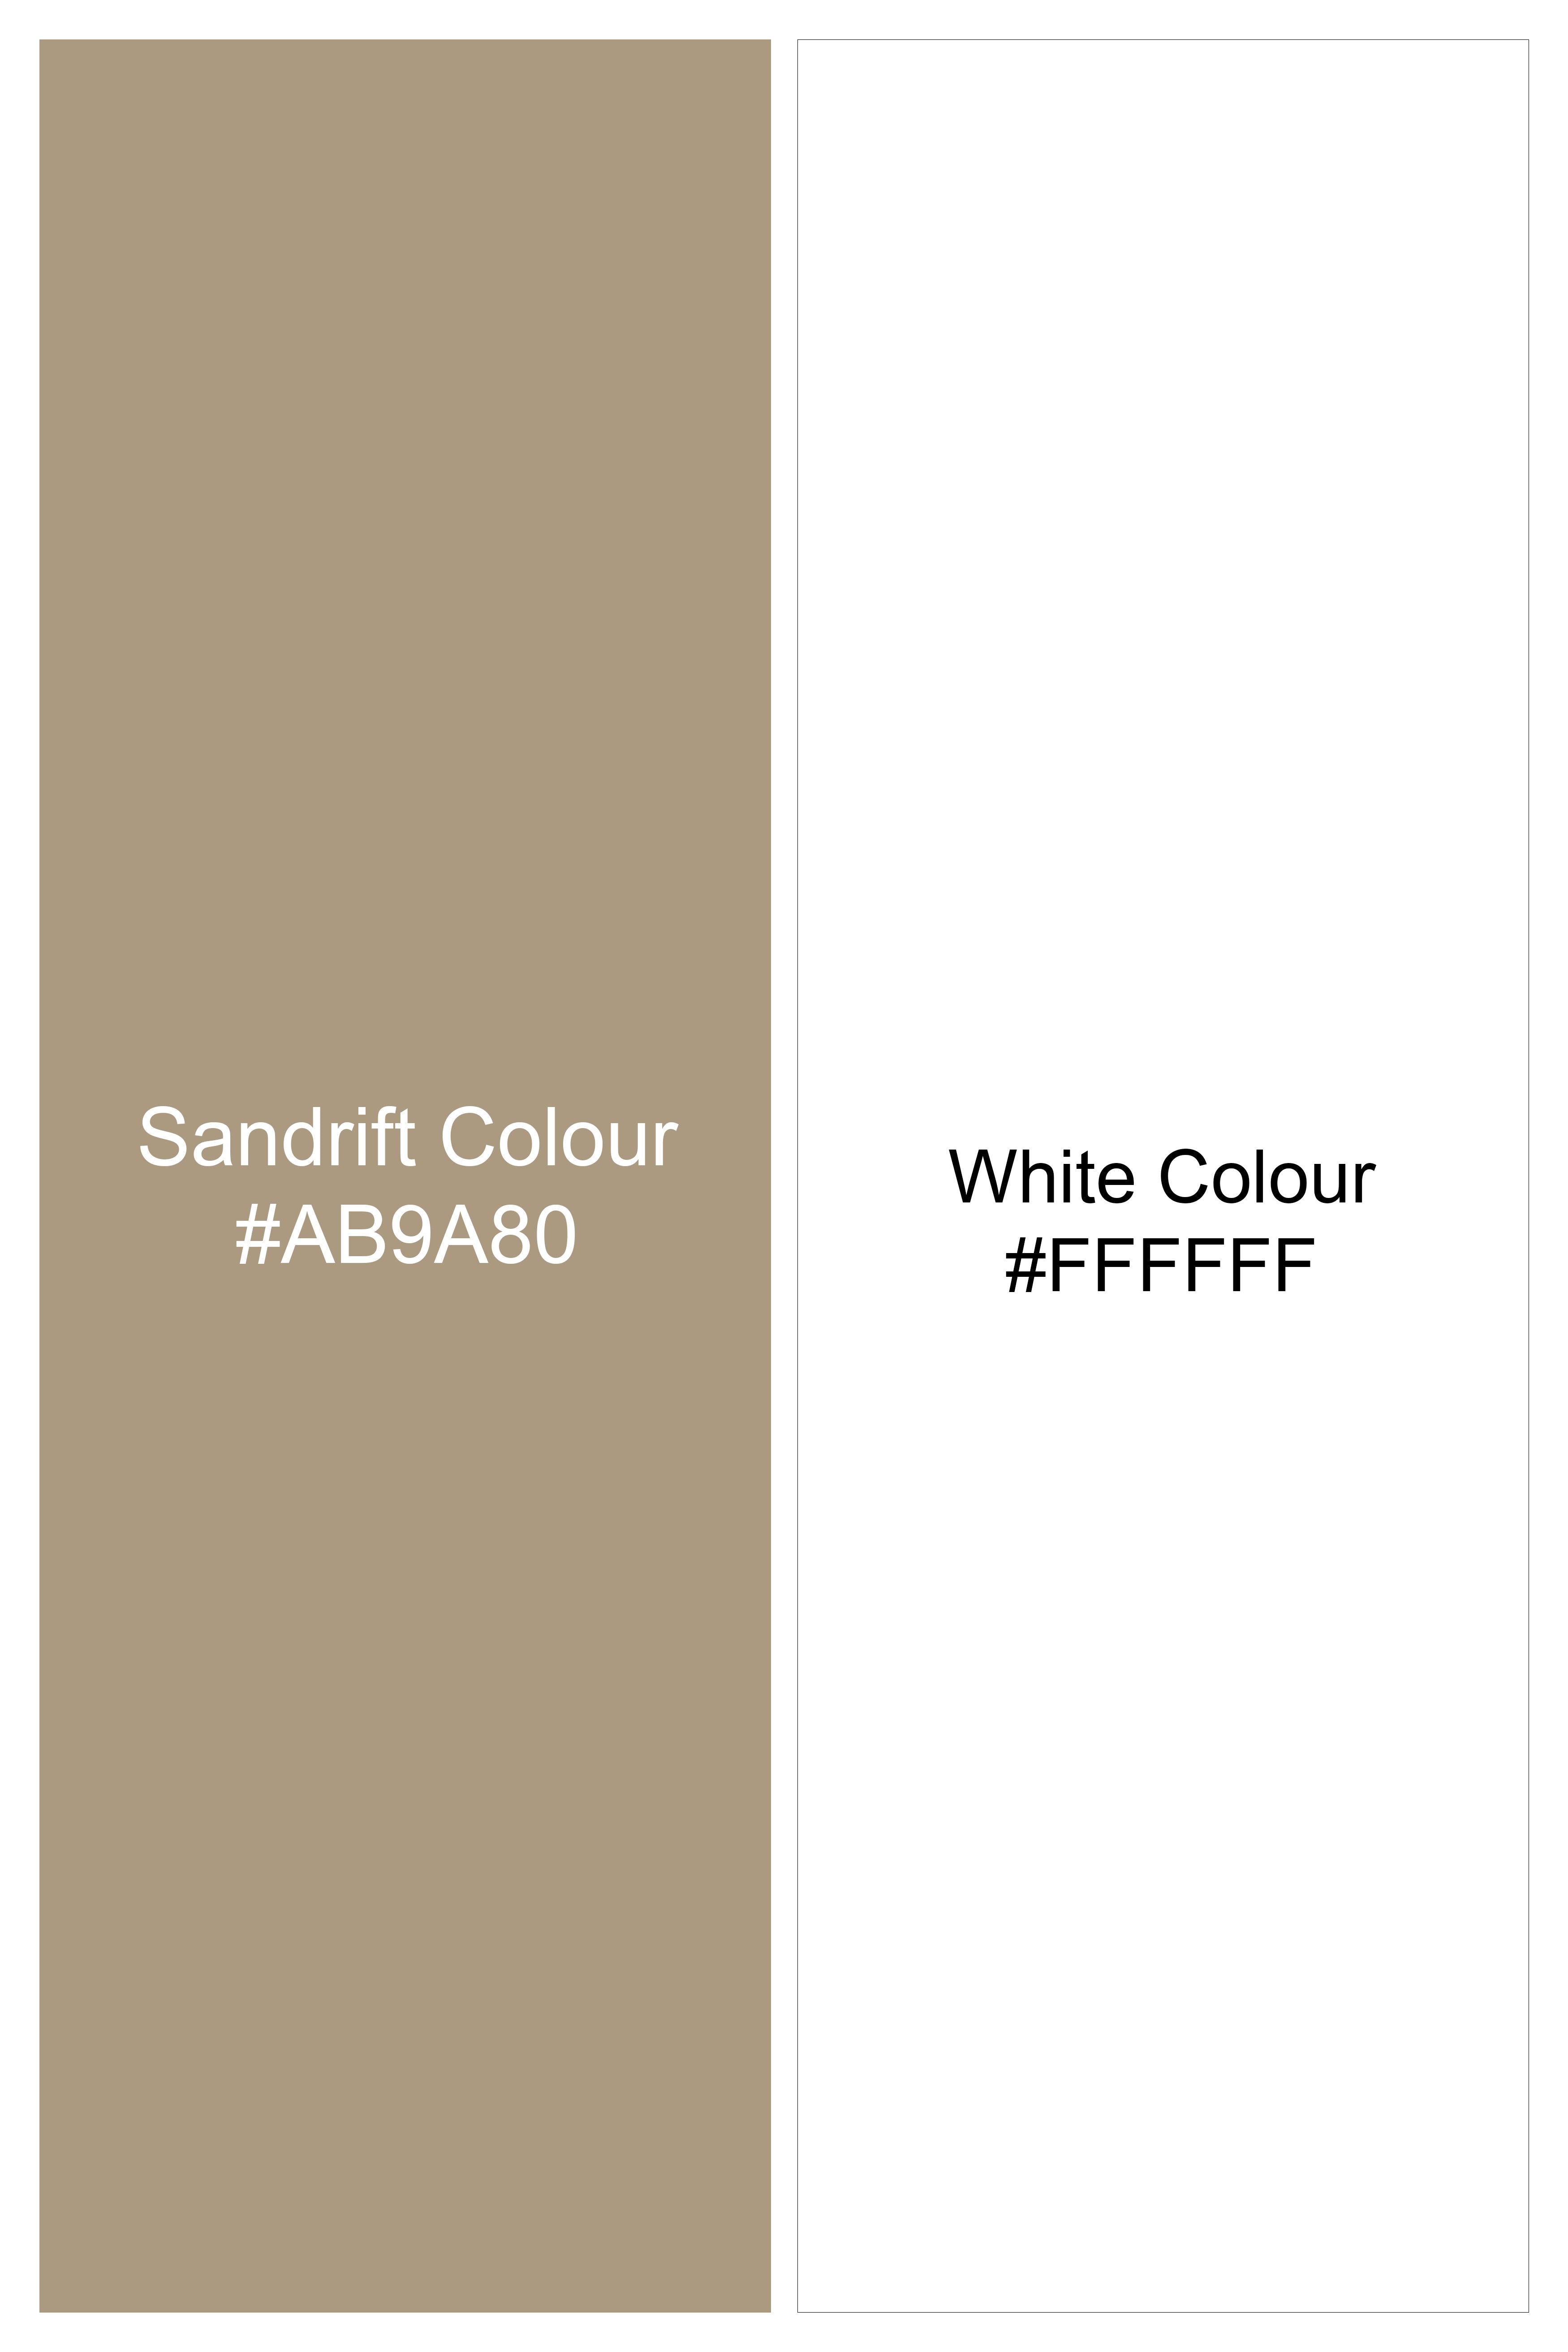 Sandrift Cream with White Plaid Wool Blend Pant